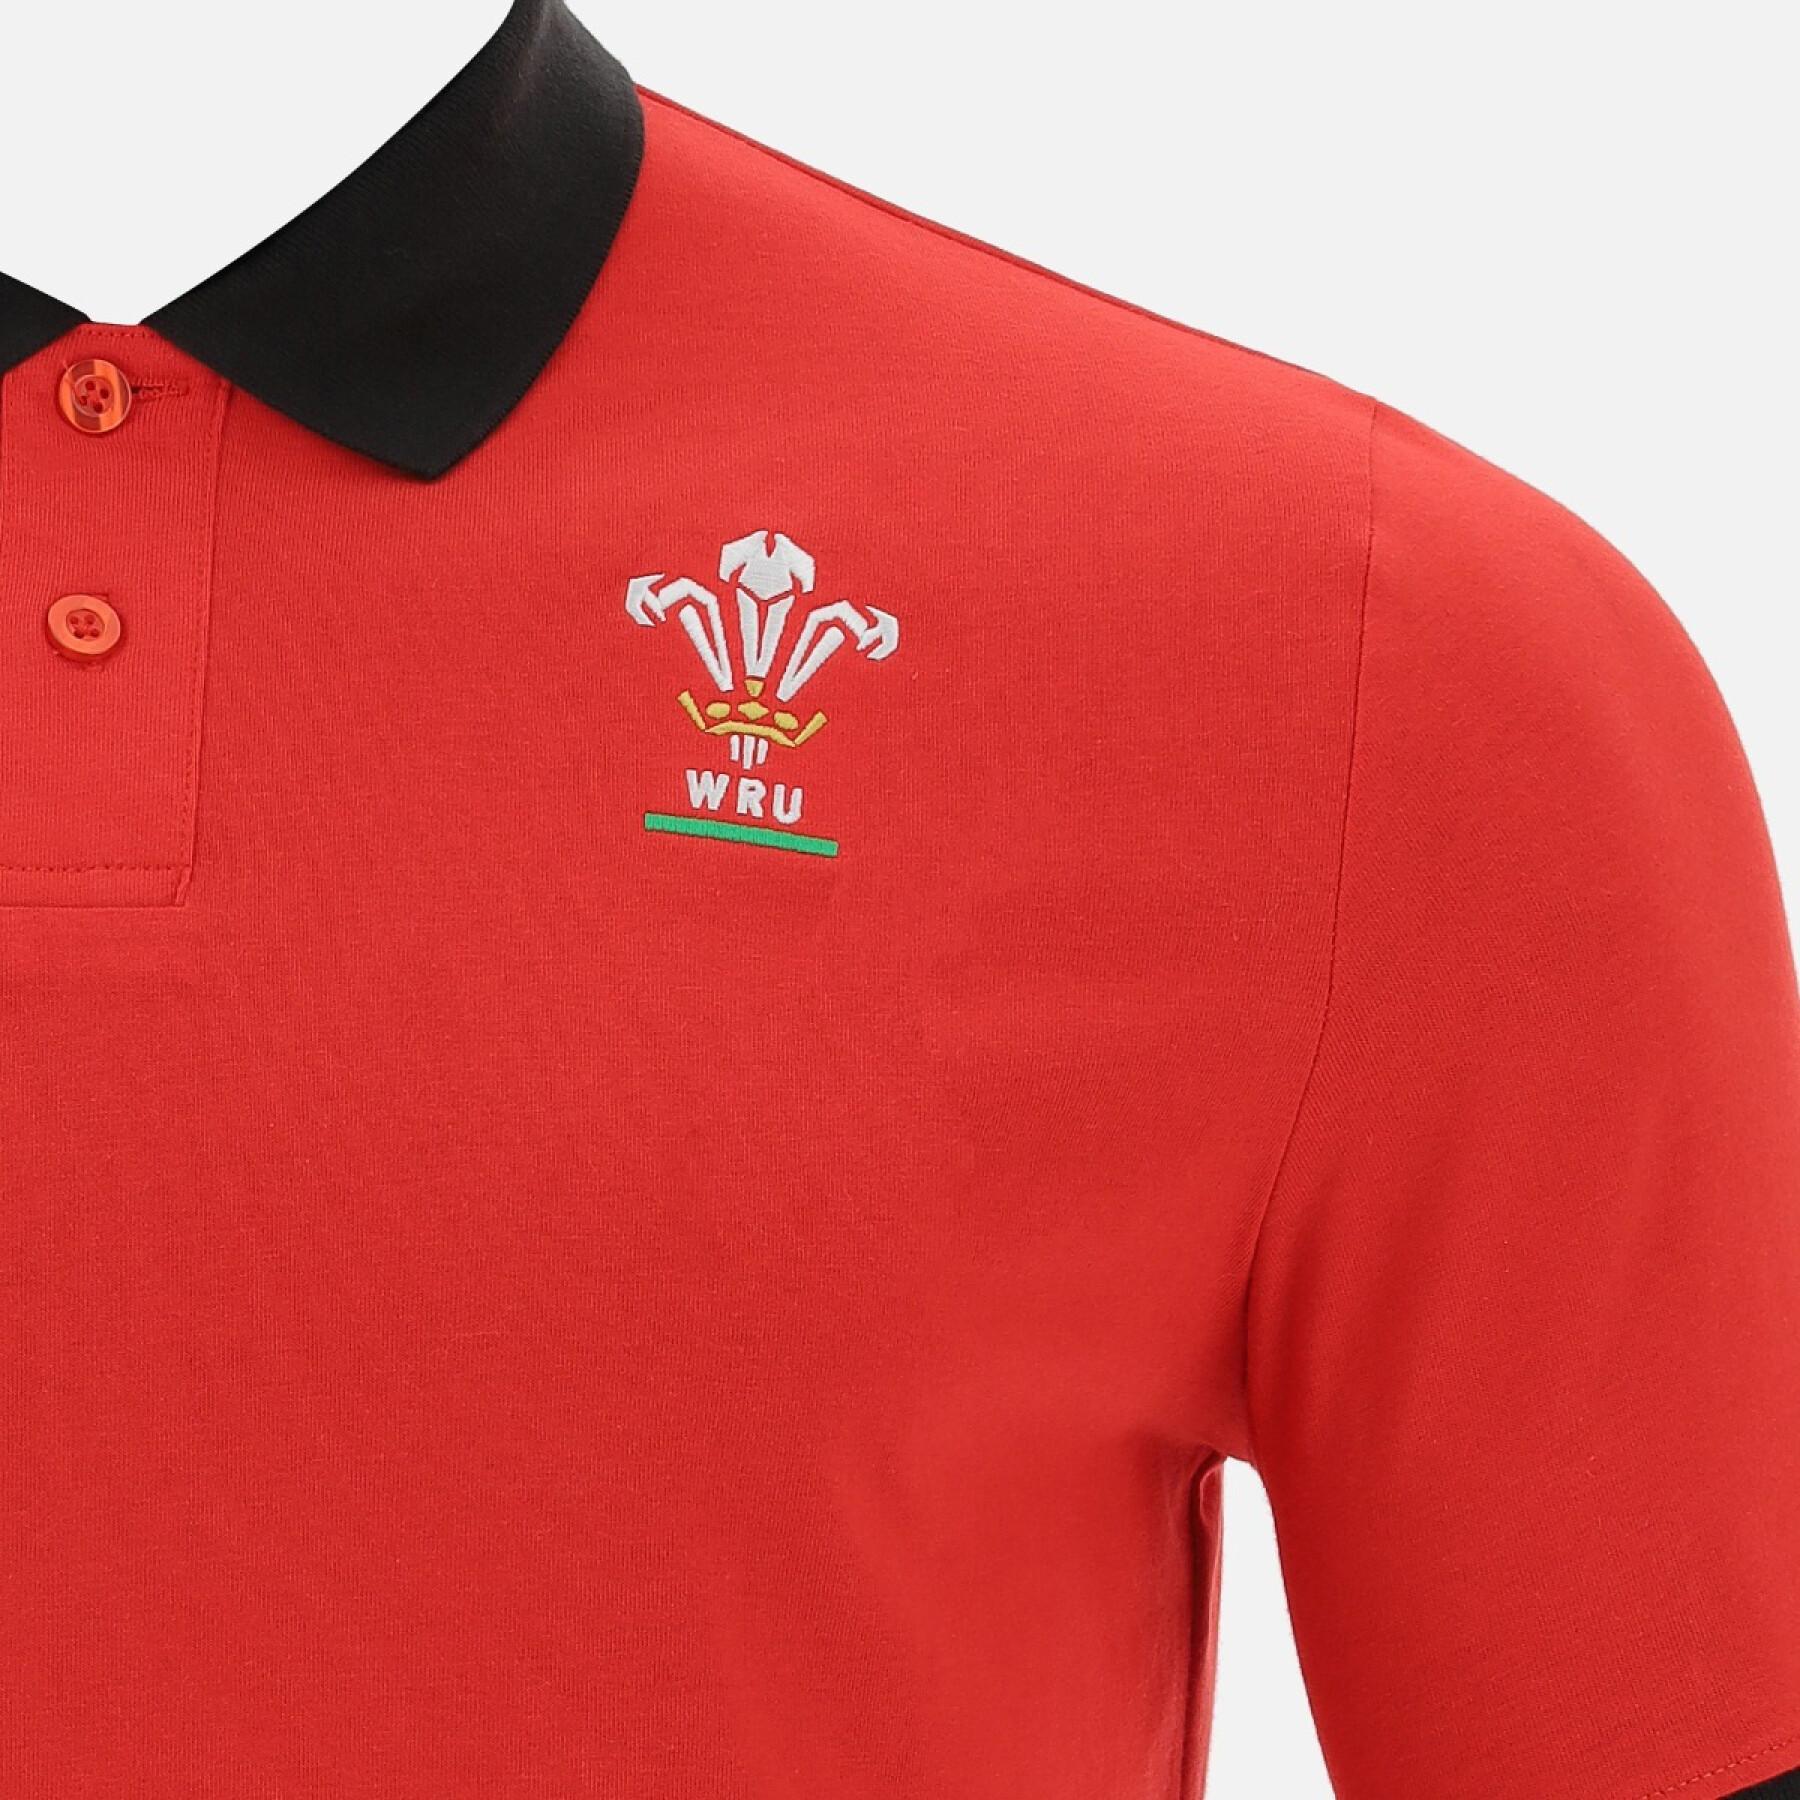 Polo algodón Gales rugby 2020/21